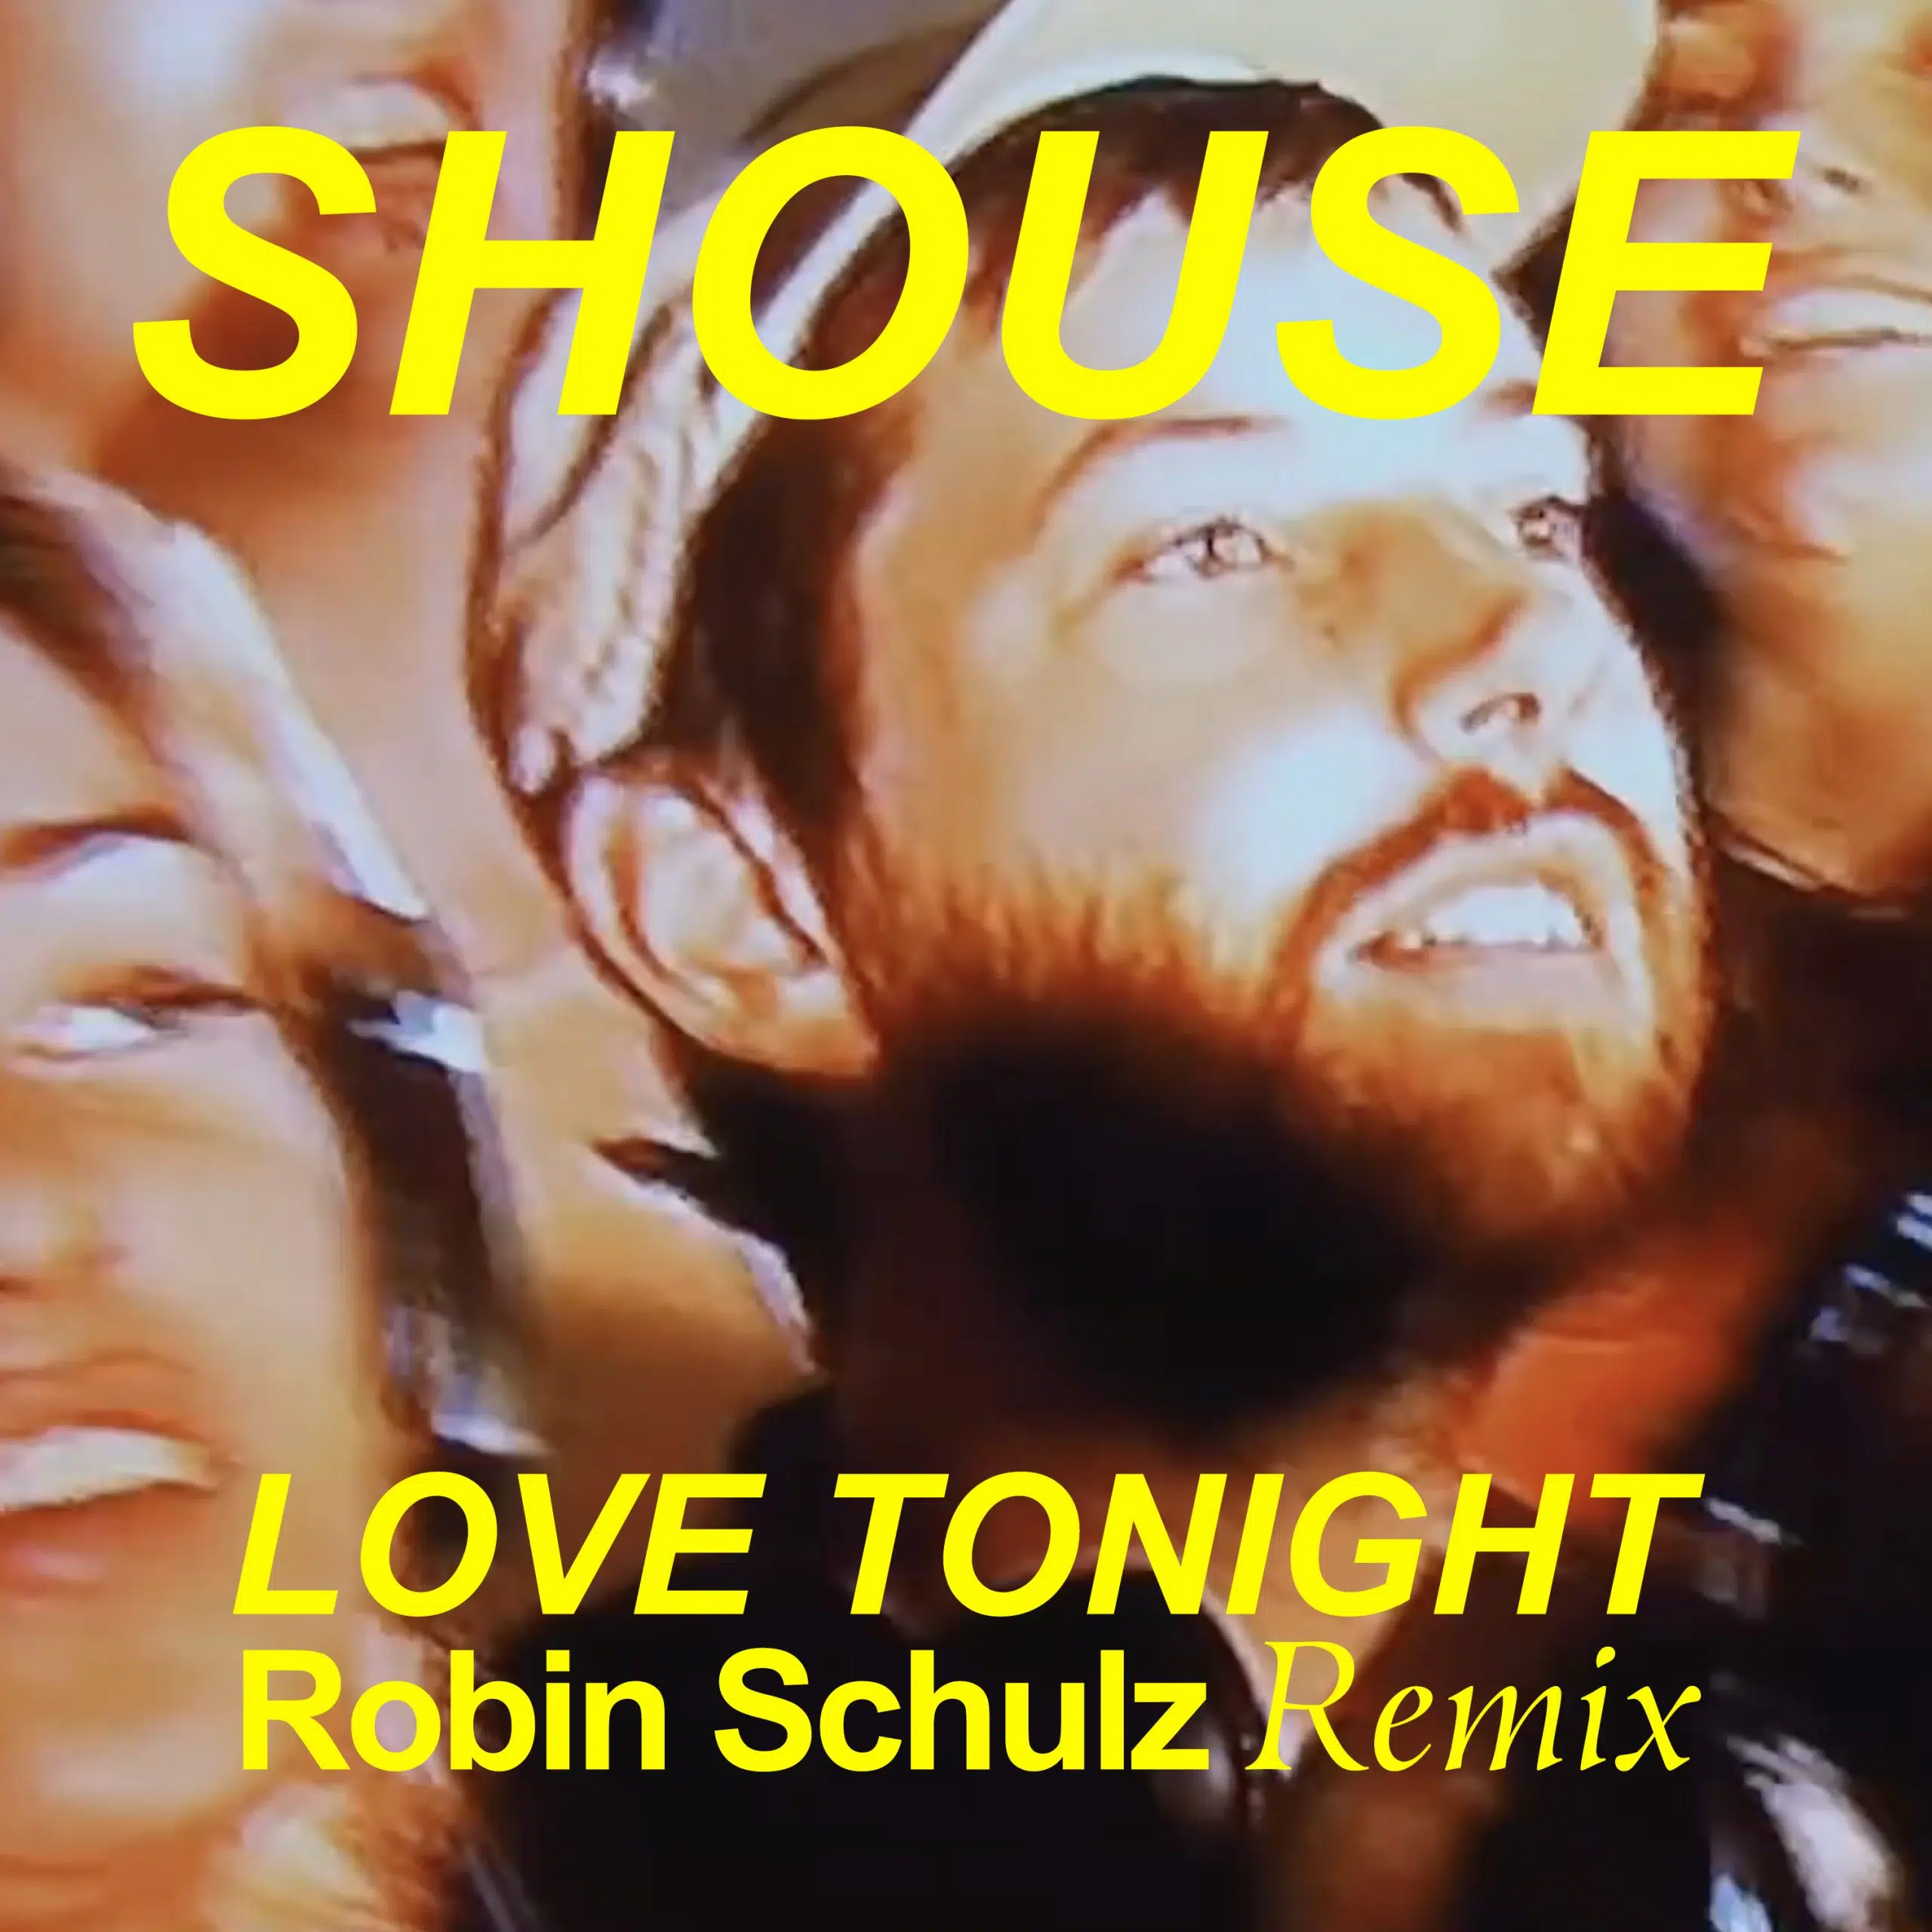 Robin Schulz Remix of Shouse “Love Tonight”